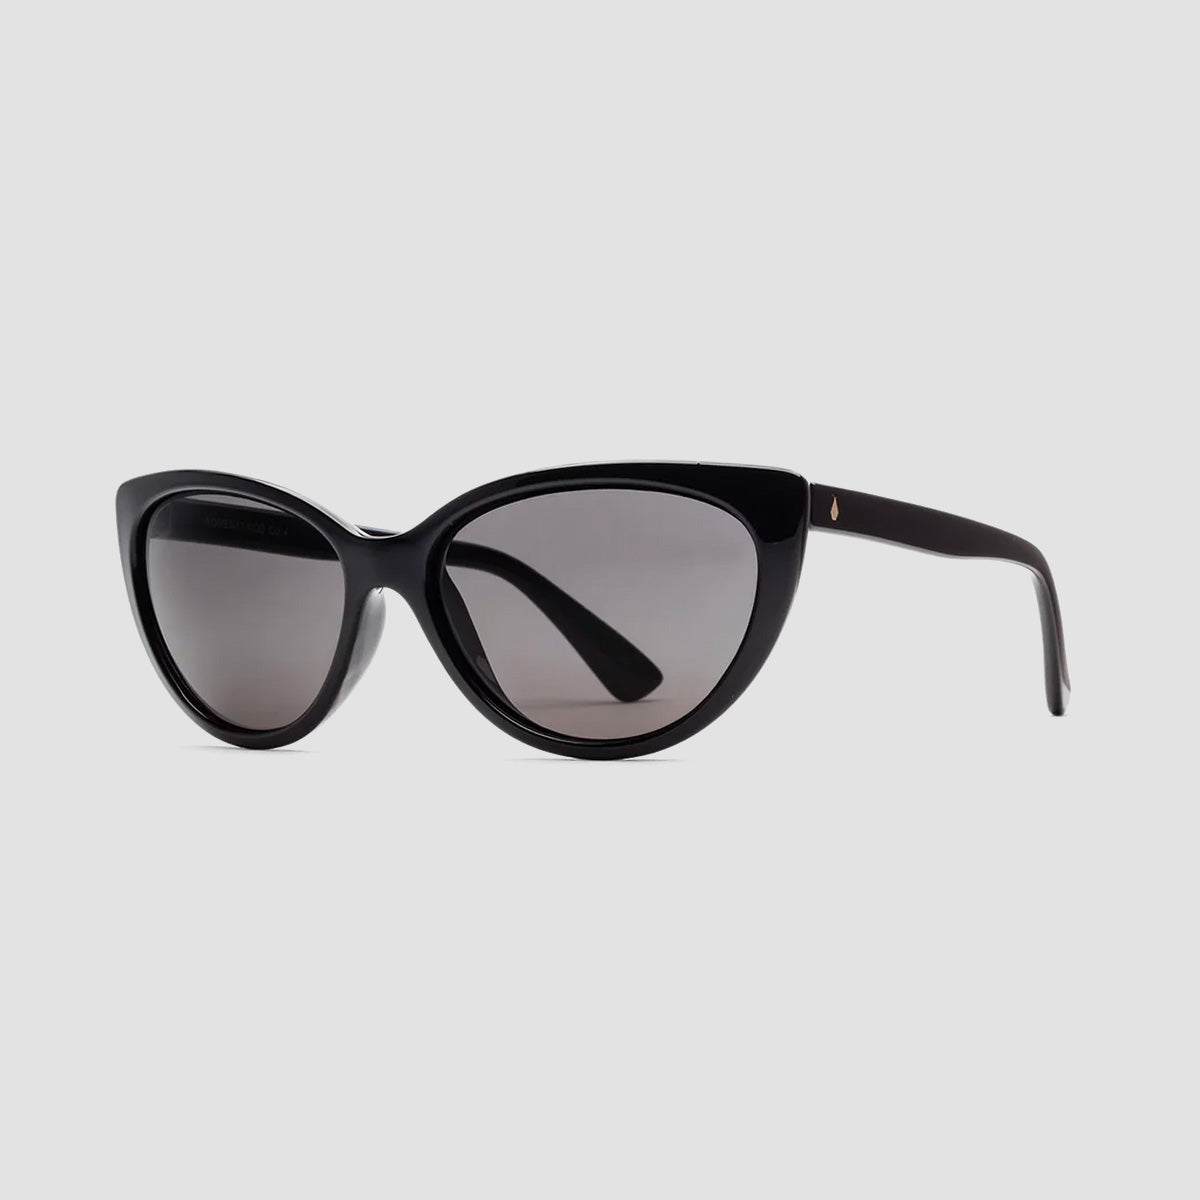 Volcom Butter Sunglasses Gloss Black/Grey - Womens